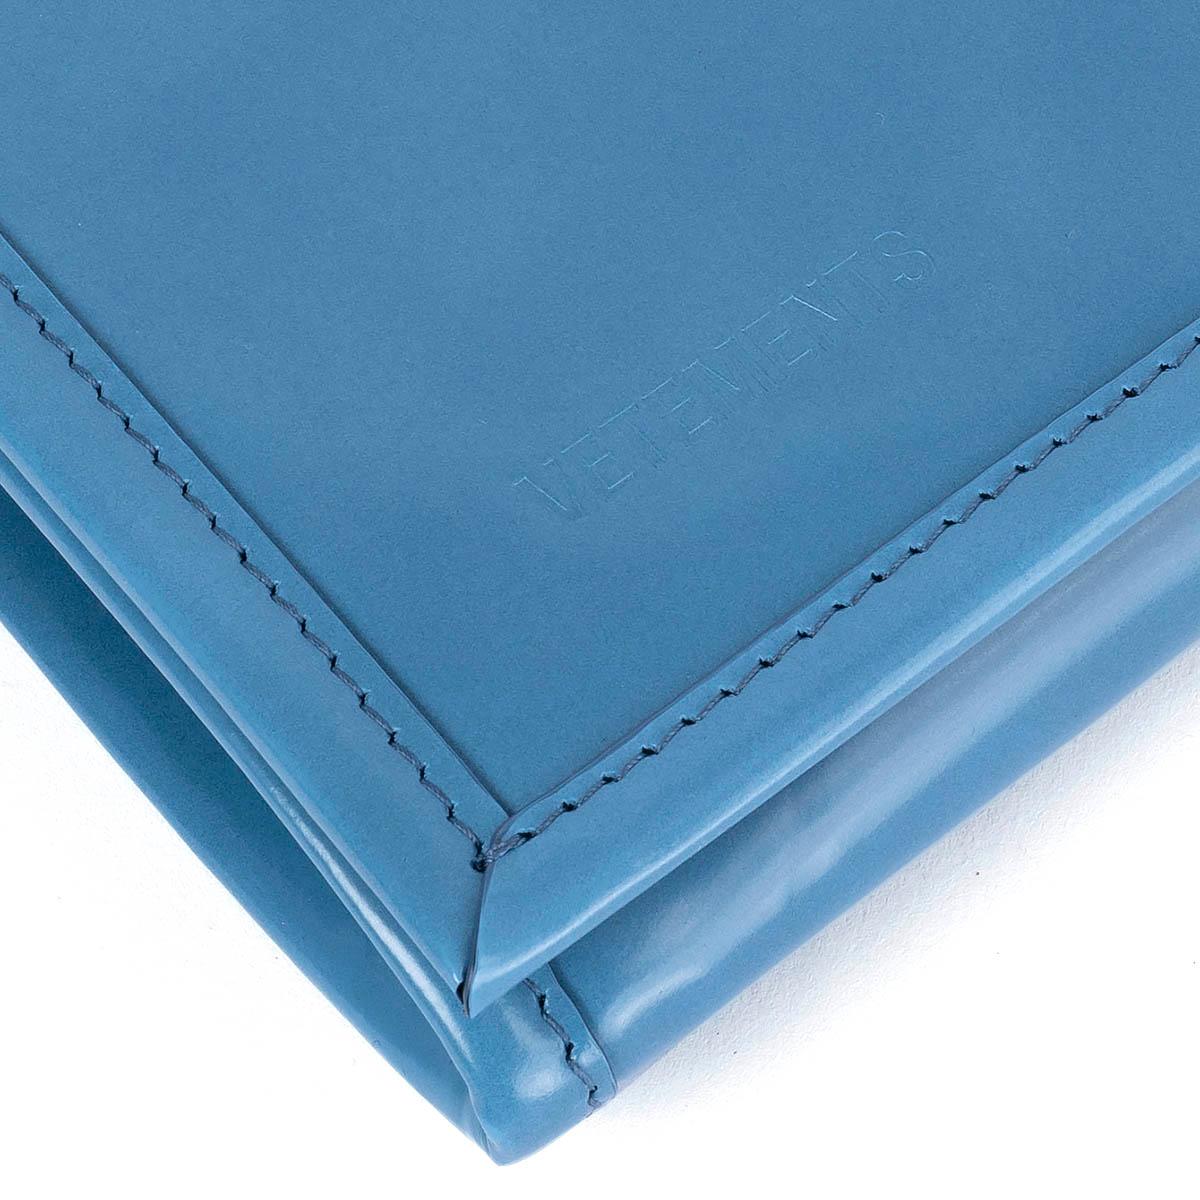 VETEMENTS x EASTPAK blue leather 2017 CHAIN Clutch Bag For Sale 3